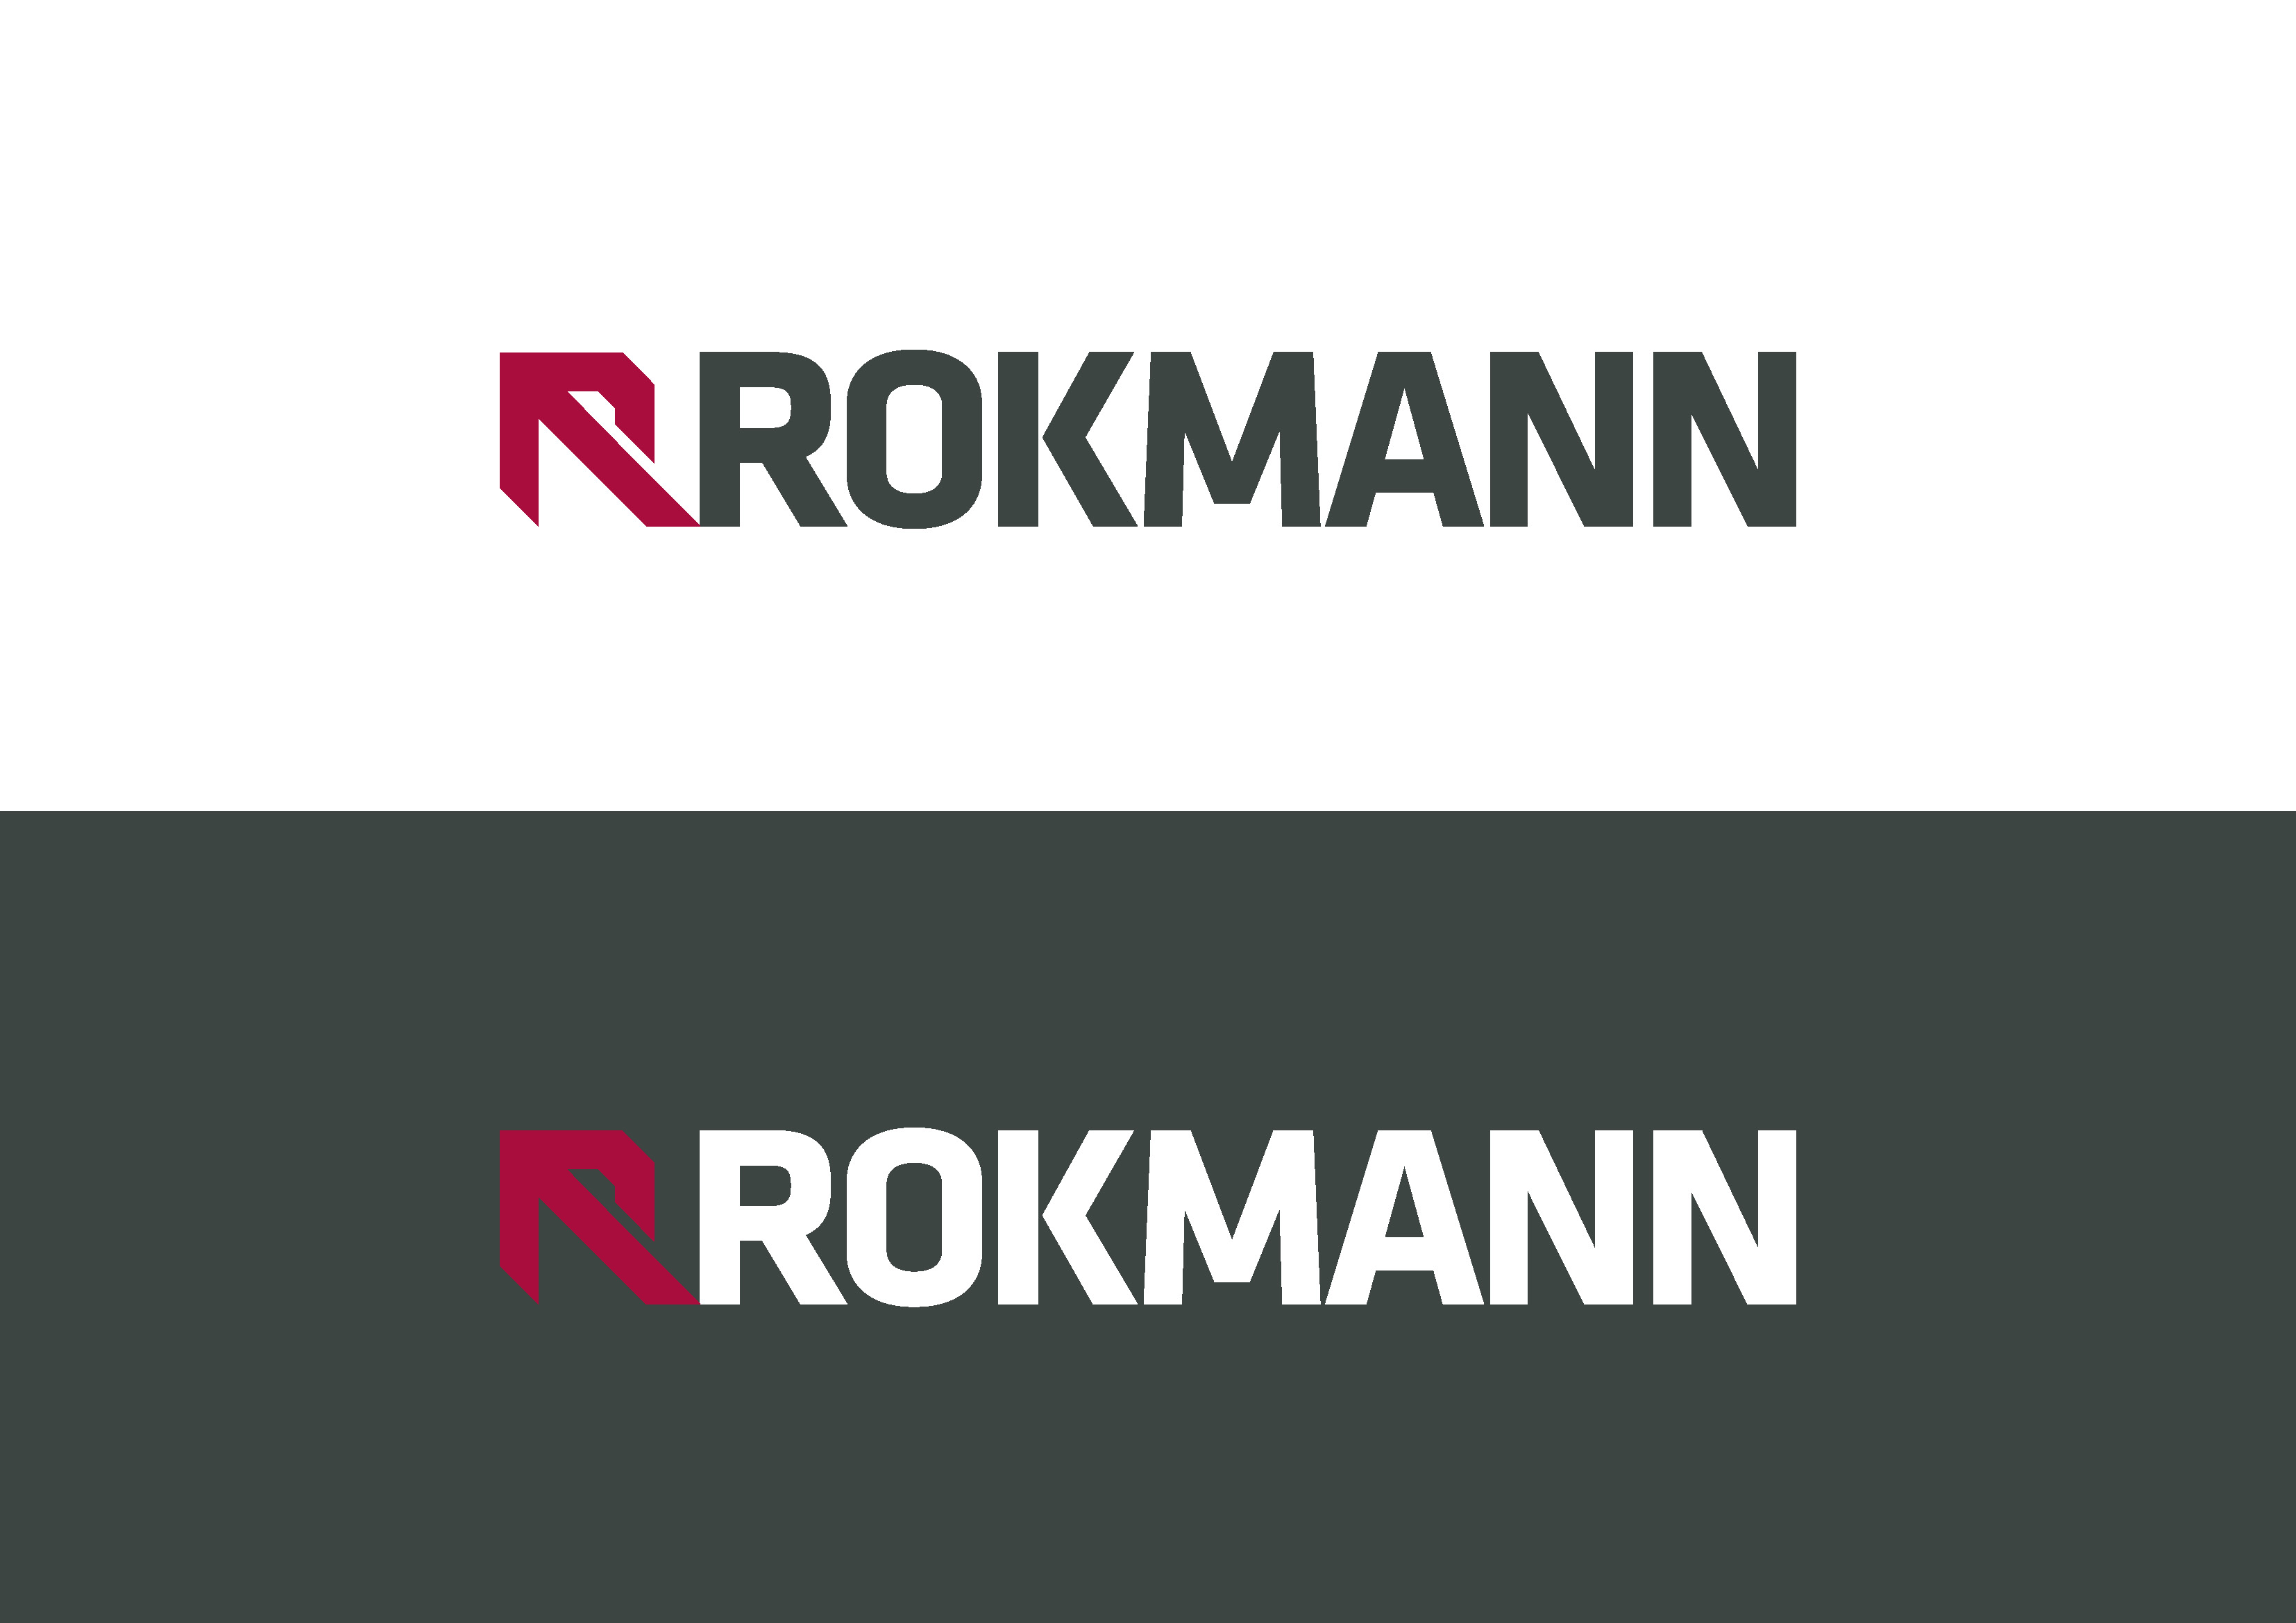 Rokmann corporate identity